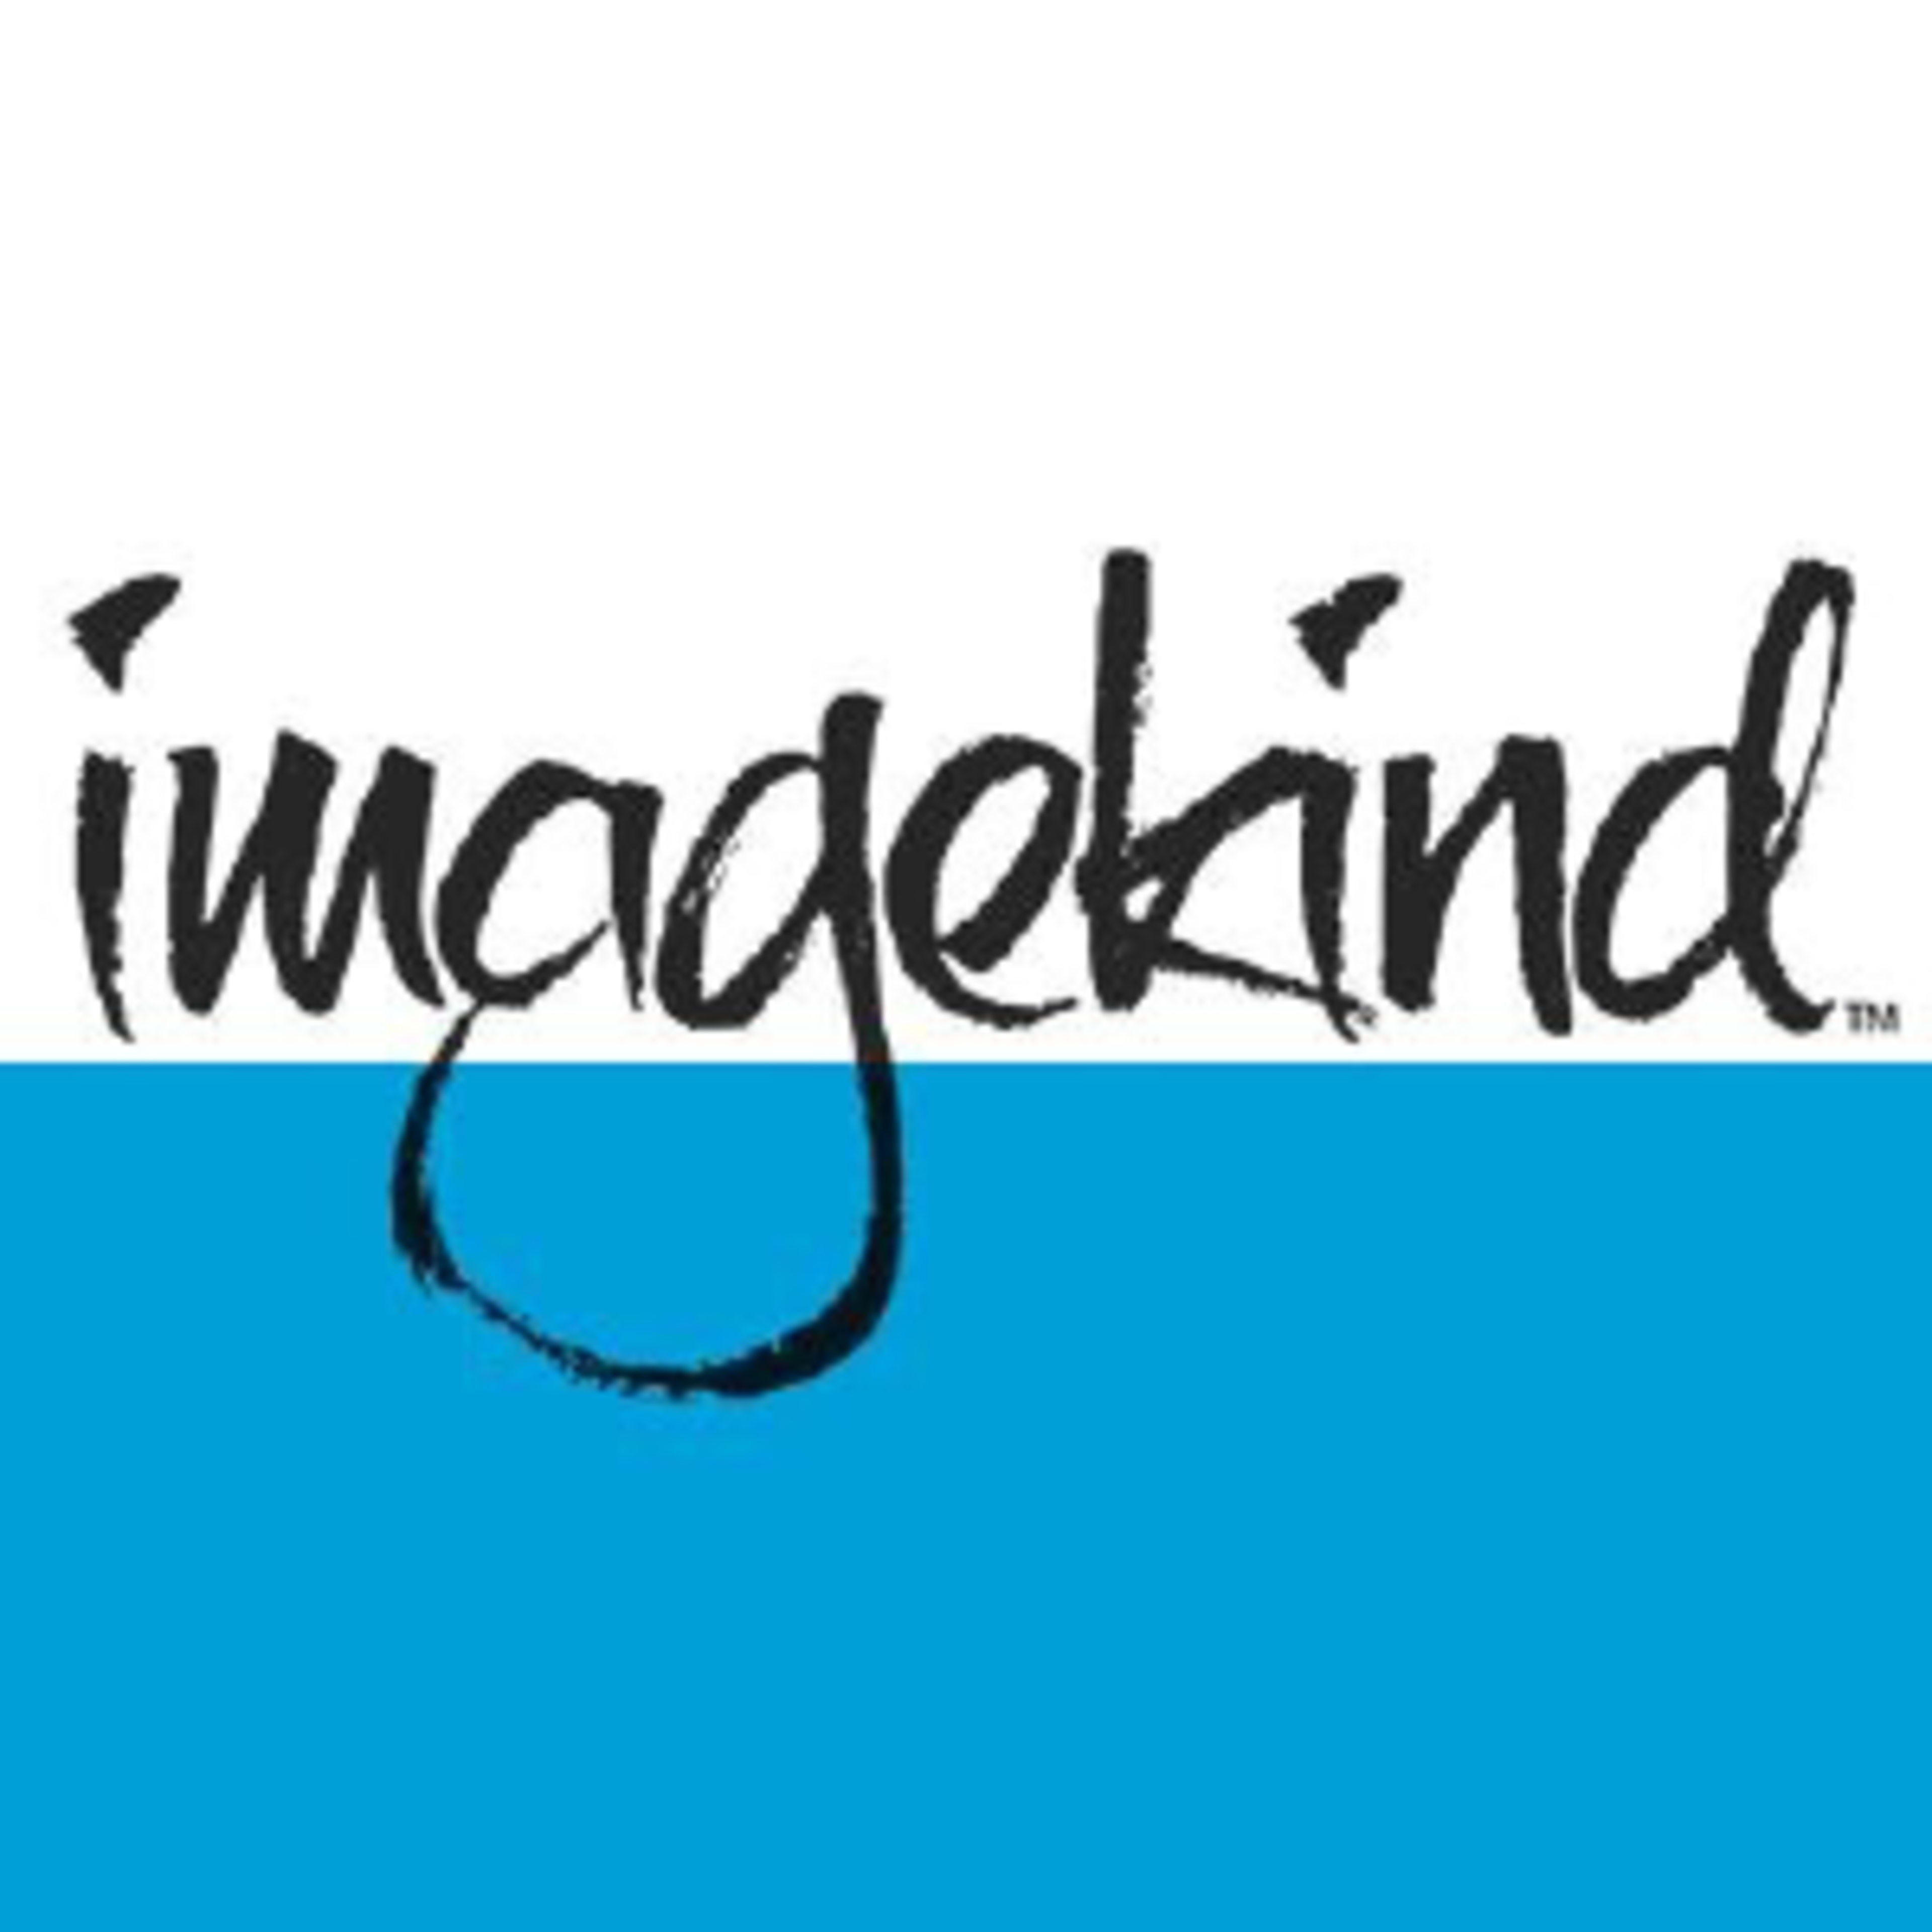 Imagekind-Artwork from independent artistsCode